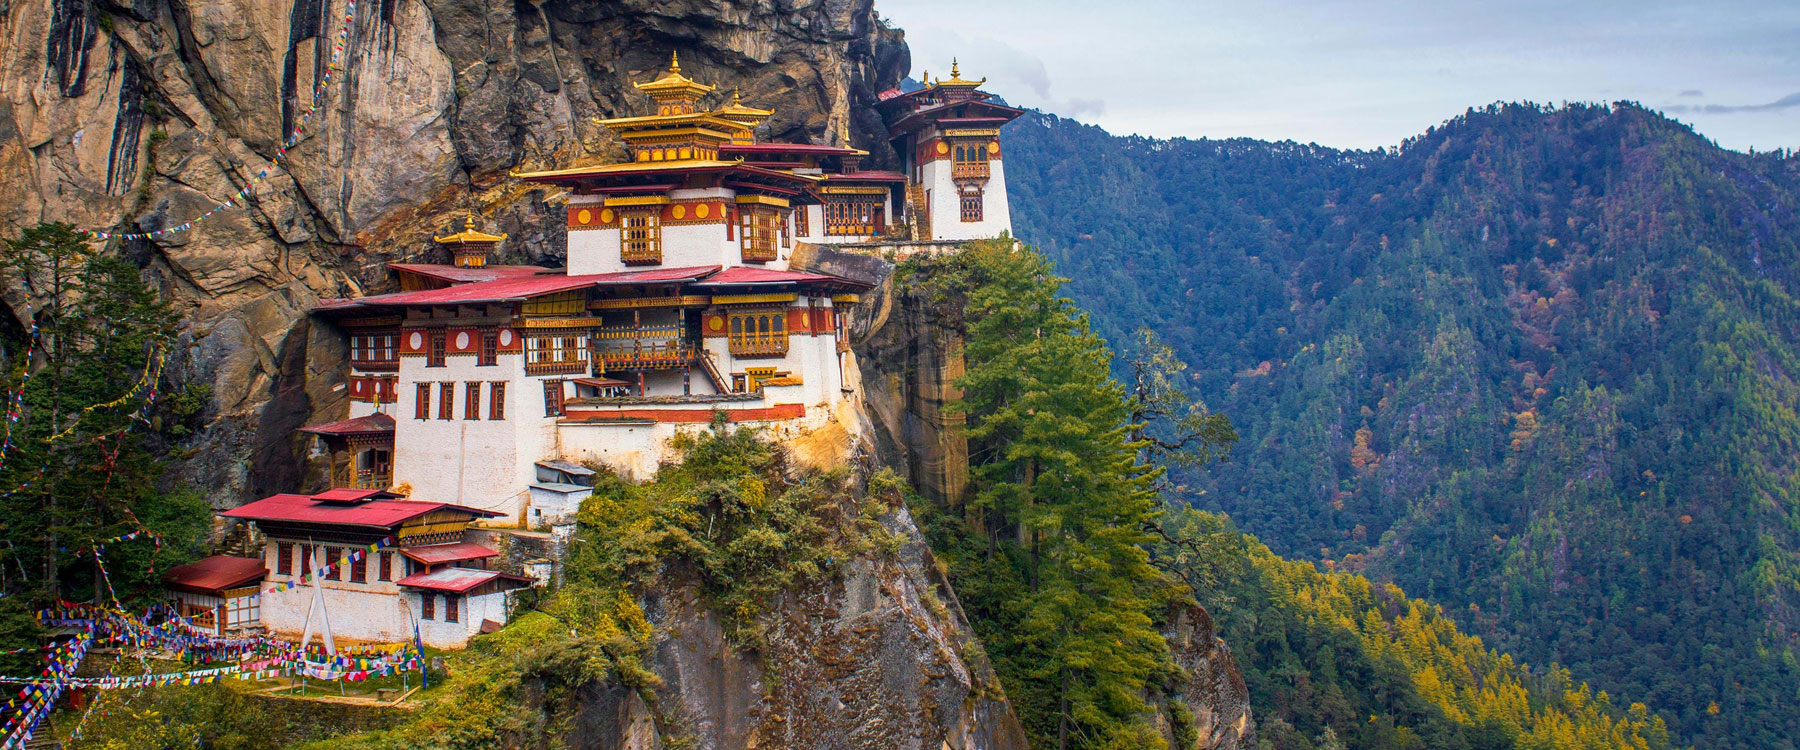 nepal-bhutan-trip-by-mount-adventure-holidays-1.jpg